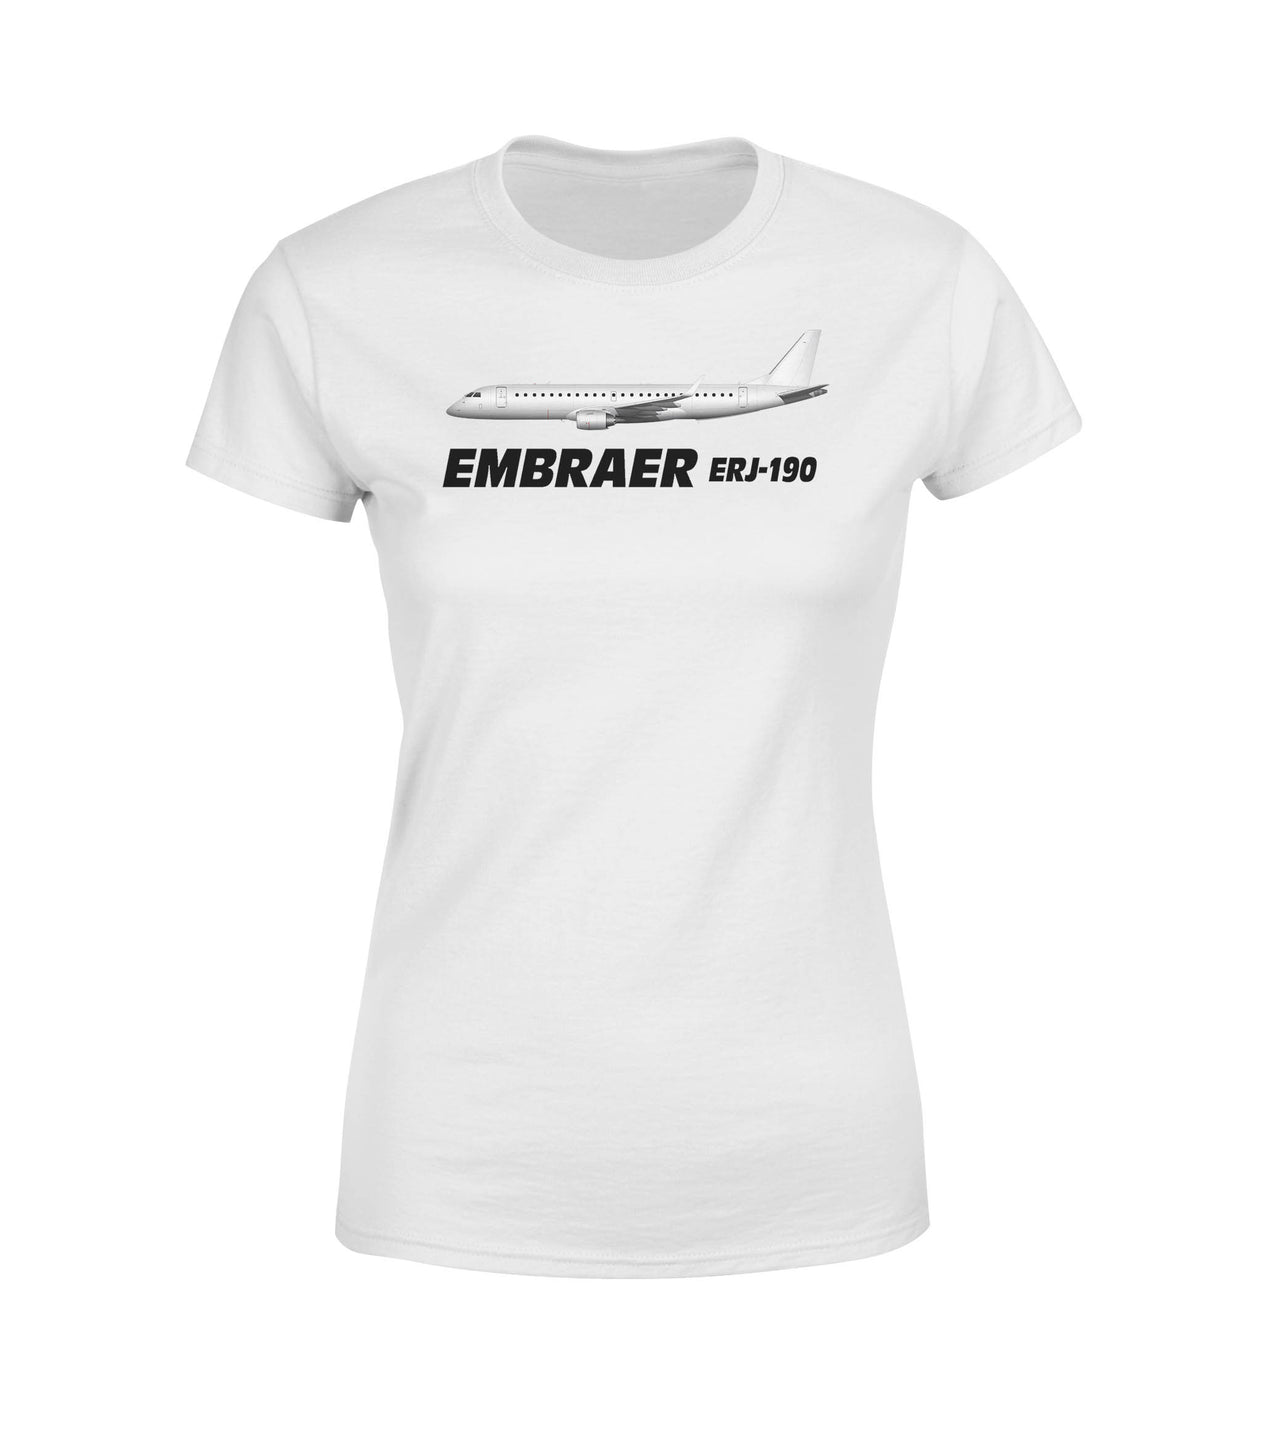 The Embraer ERJ-190 Designed Women T-Shirts